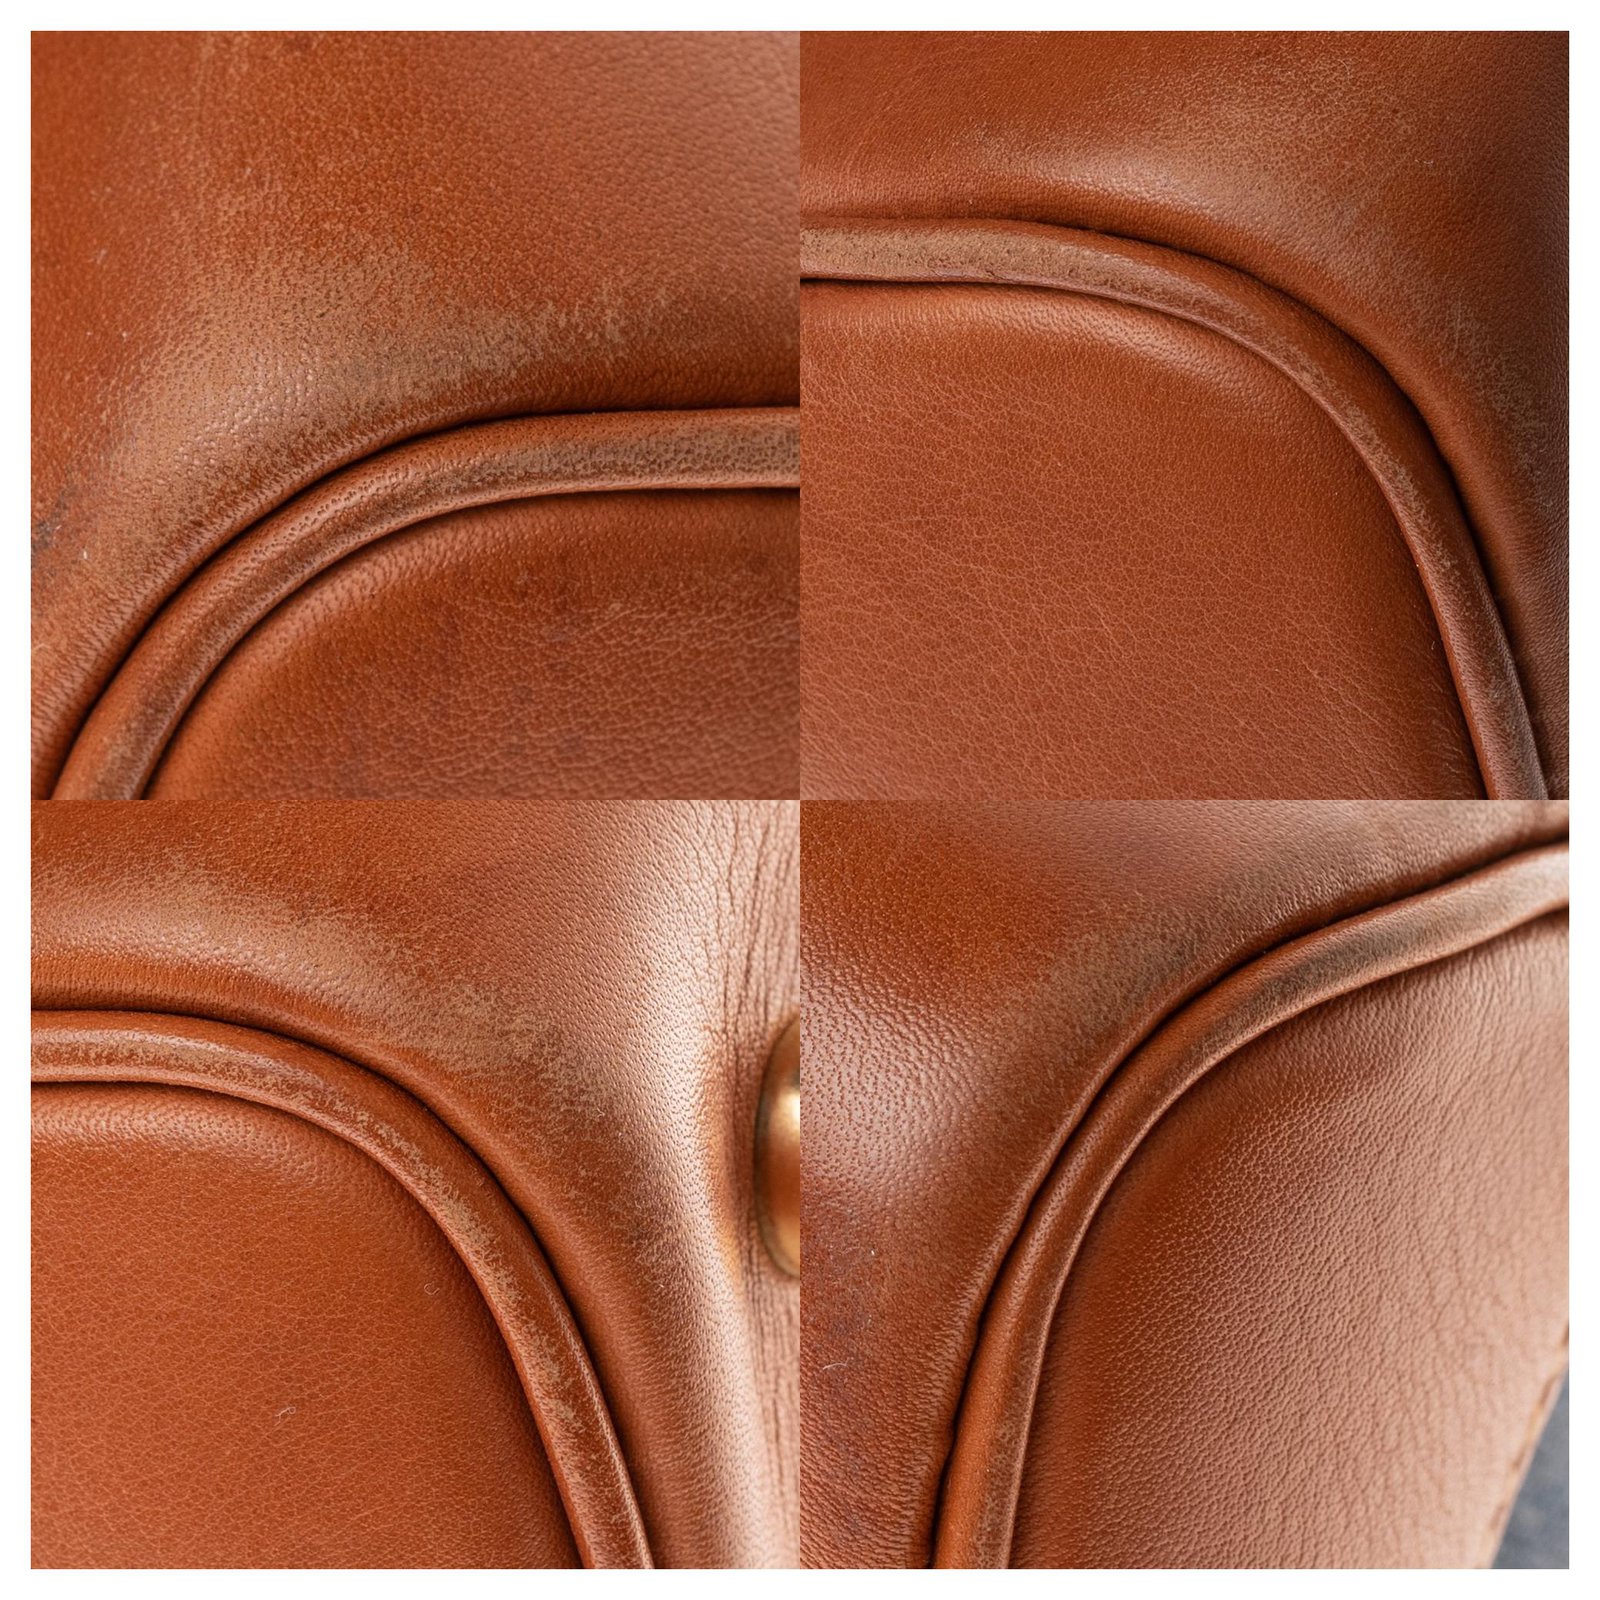 Hermès HERMES BIRKIN 35 bi-material in fawn barenia leather and